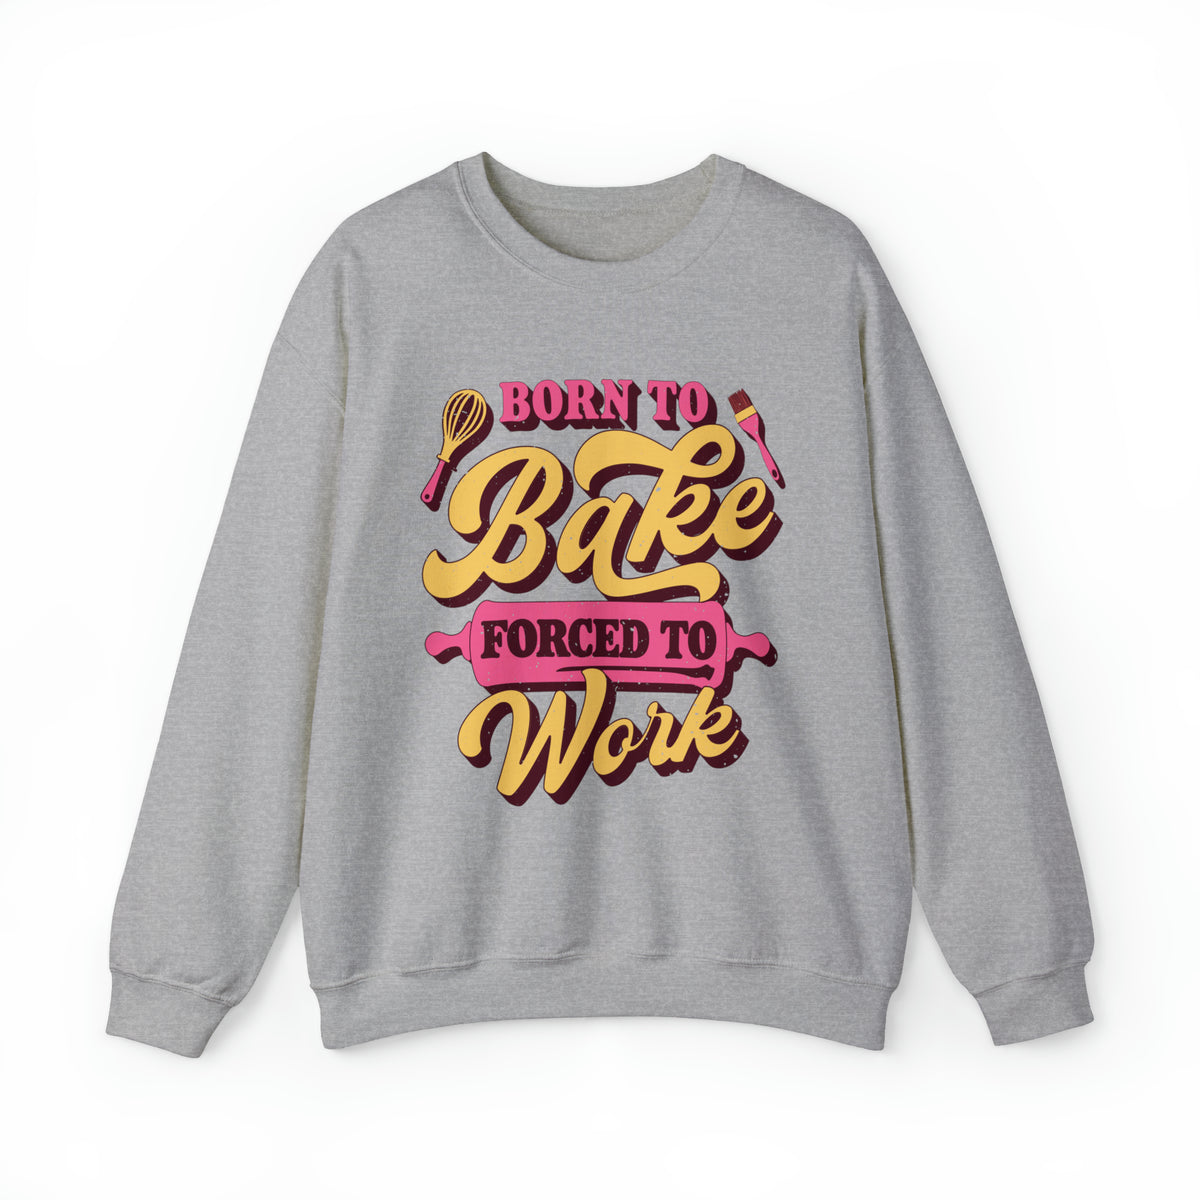 Born To Bake Funny Baking Shirt | Forced To Work Gift For Baker | Unisex Crewneck Sweatshirt